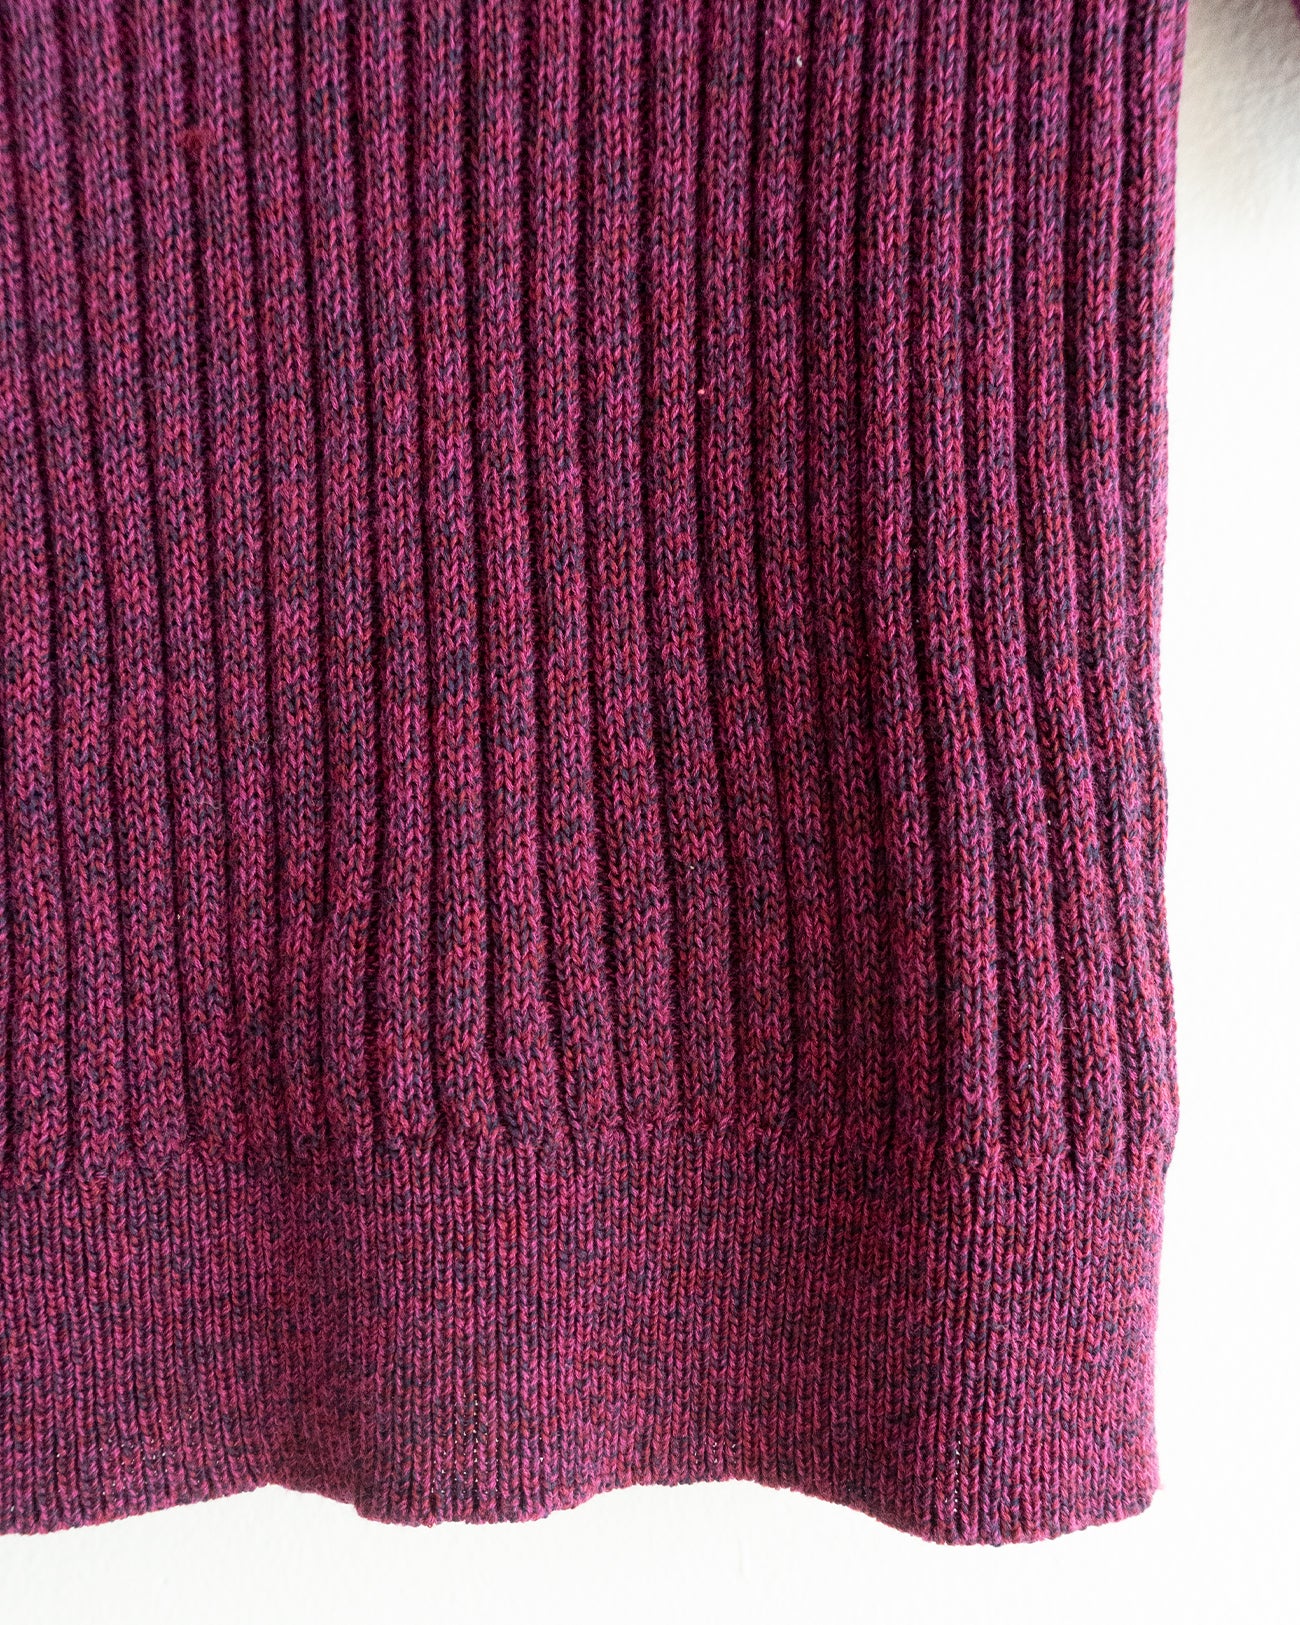 polo shirt knit